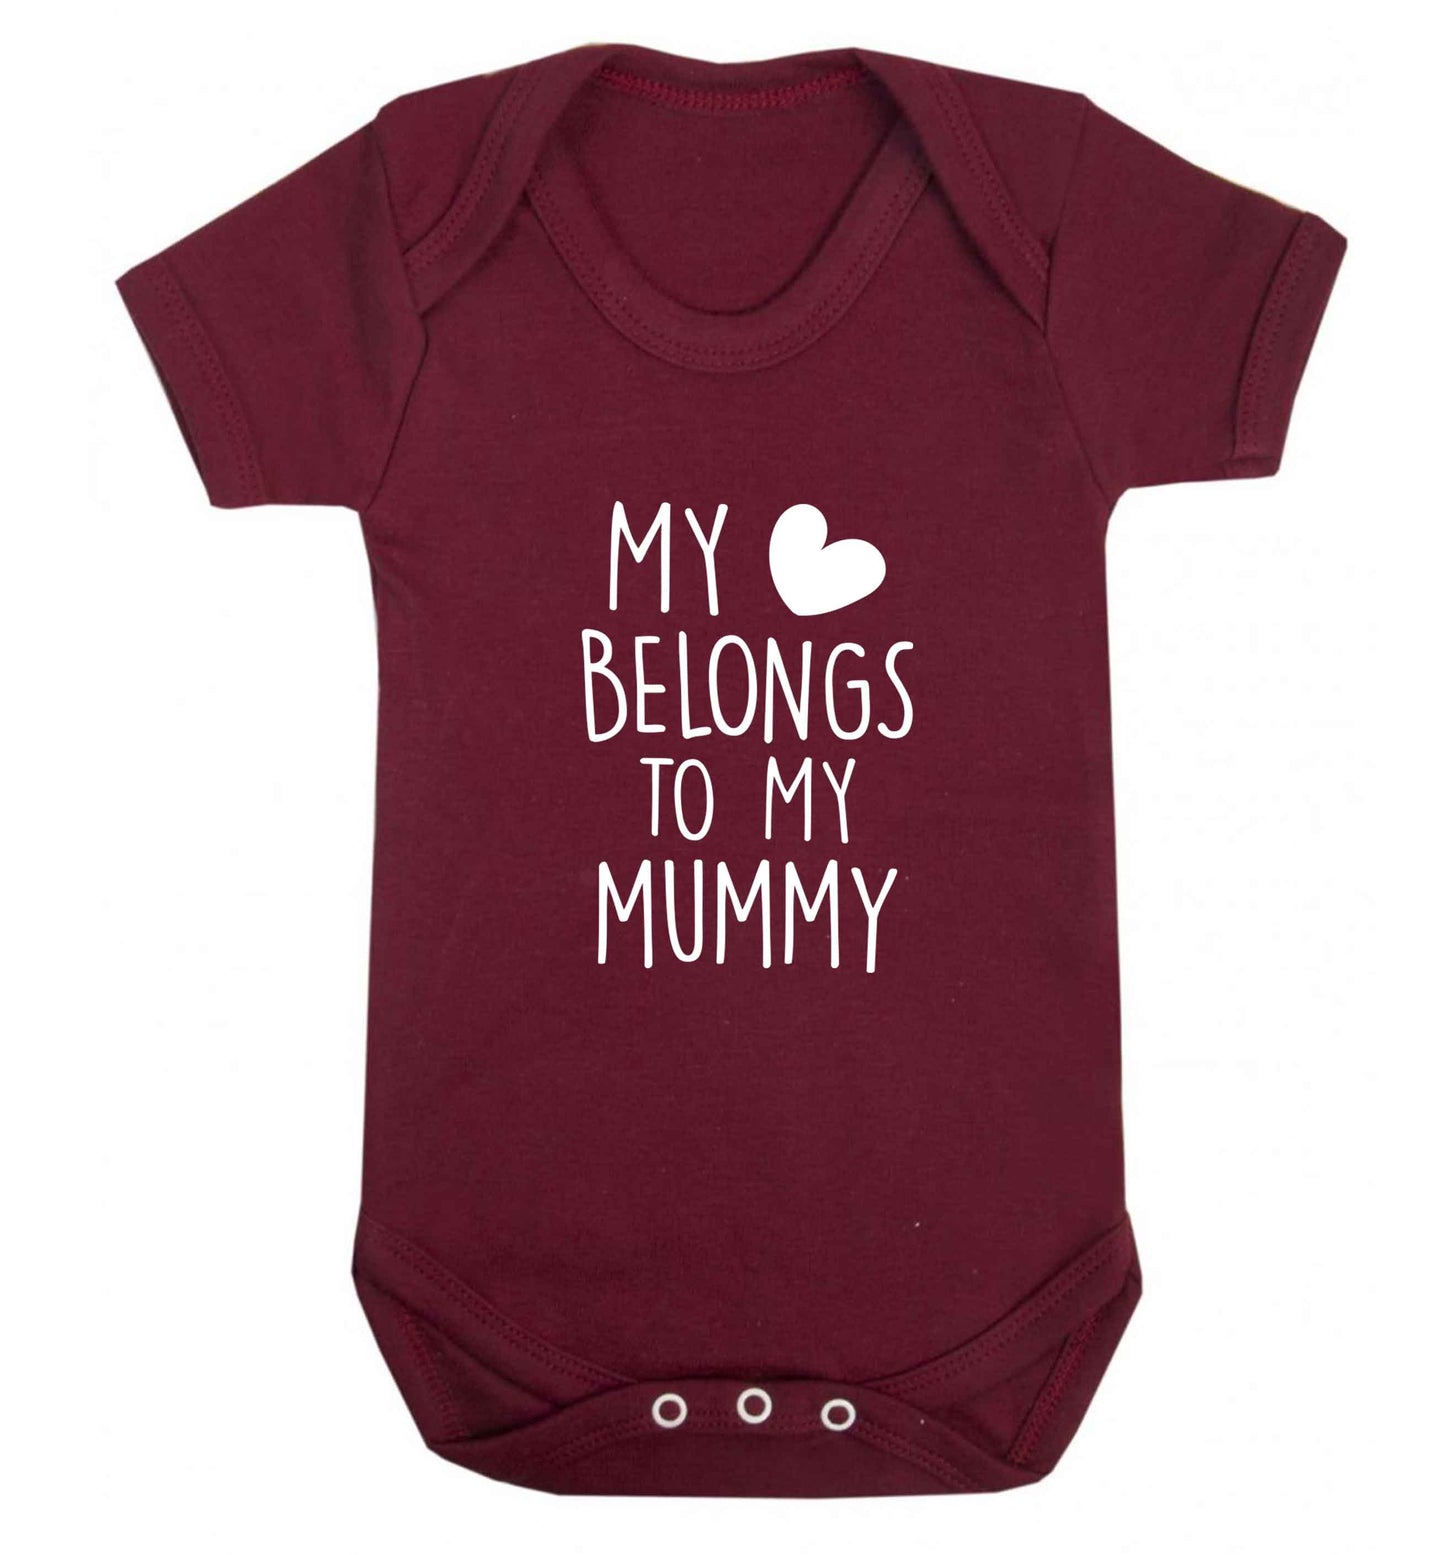 My heart belongs to my mummy baby vest maroon 18-24 months